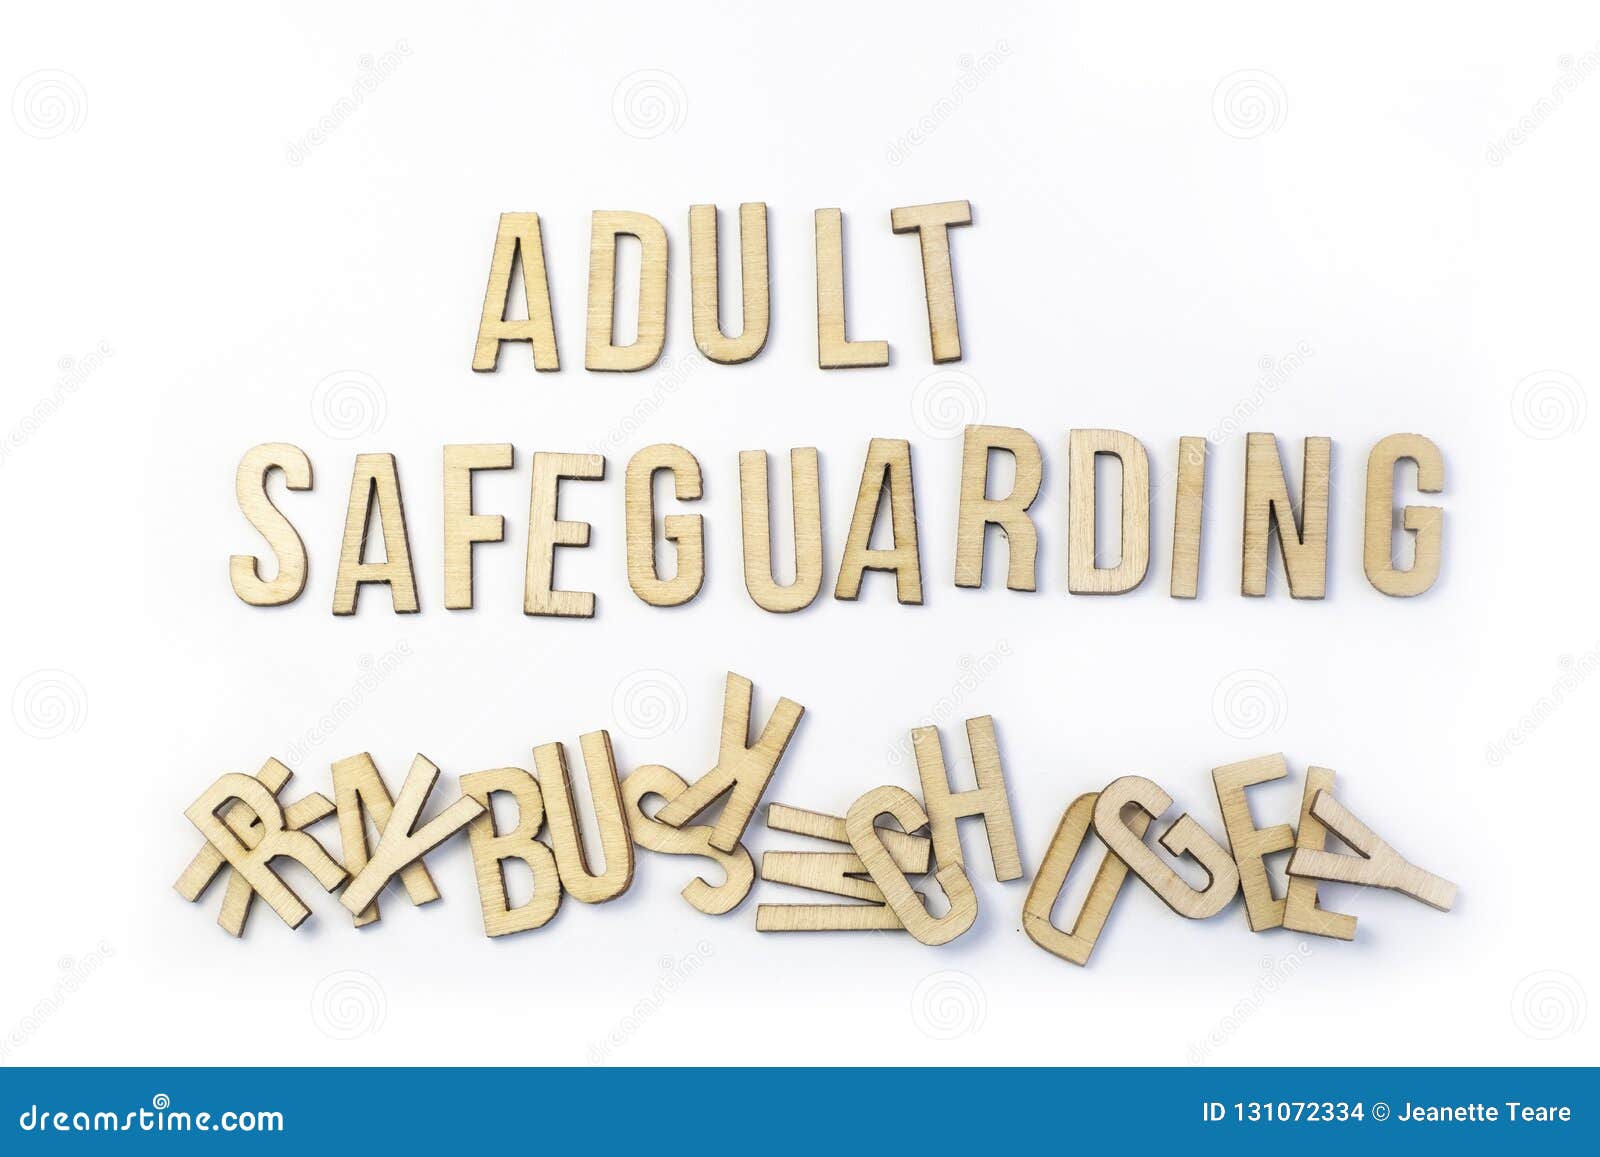 adult safeguarding concept